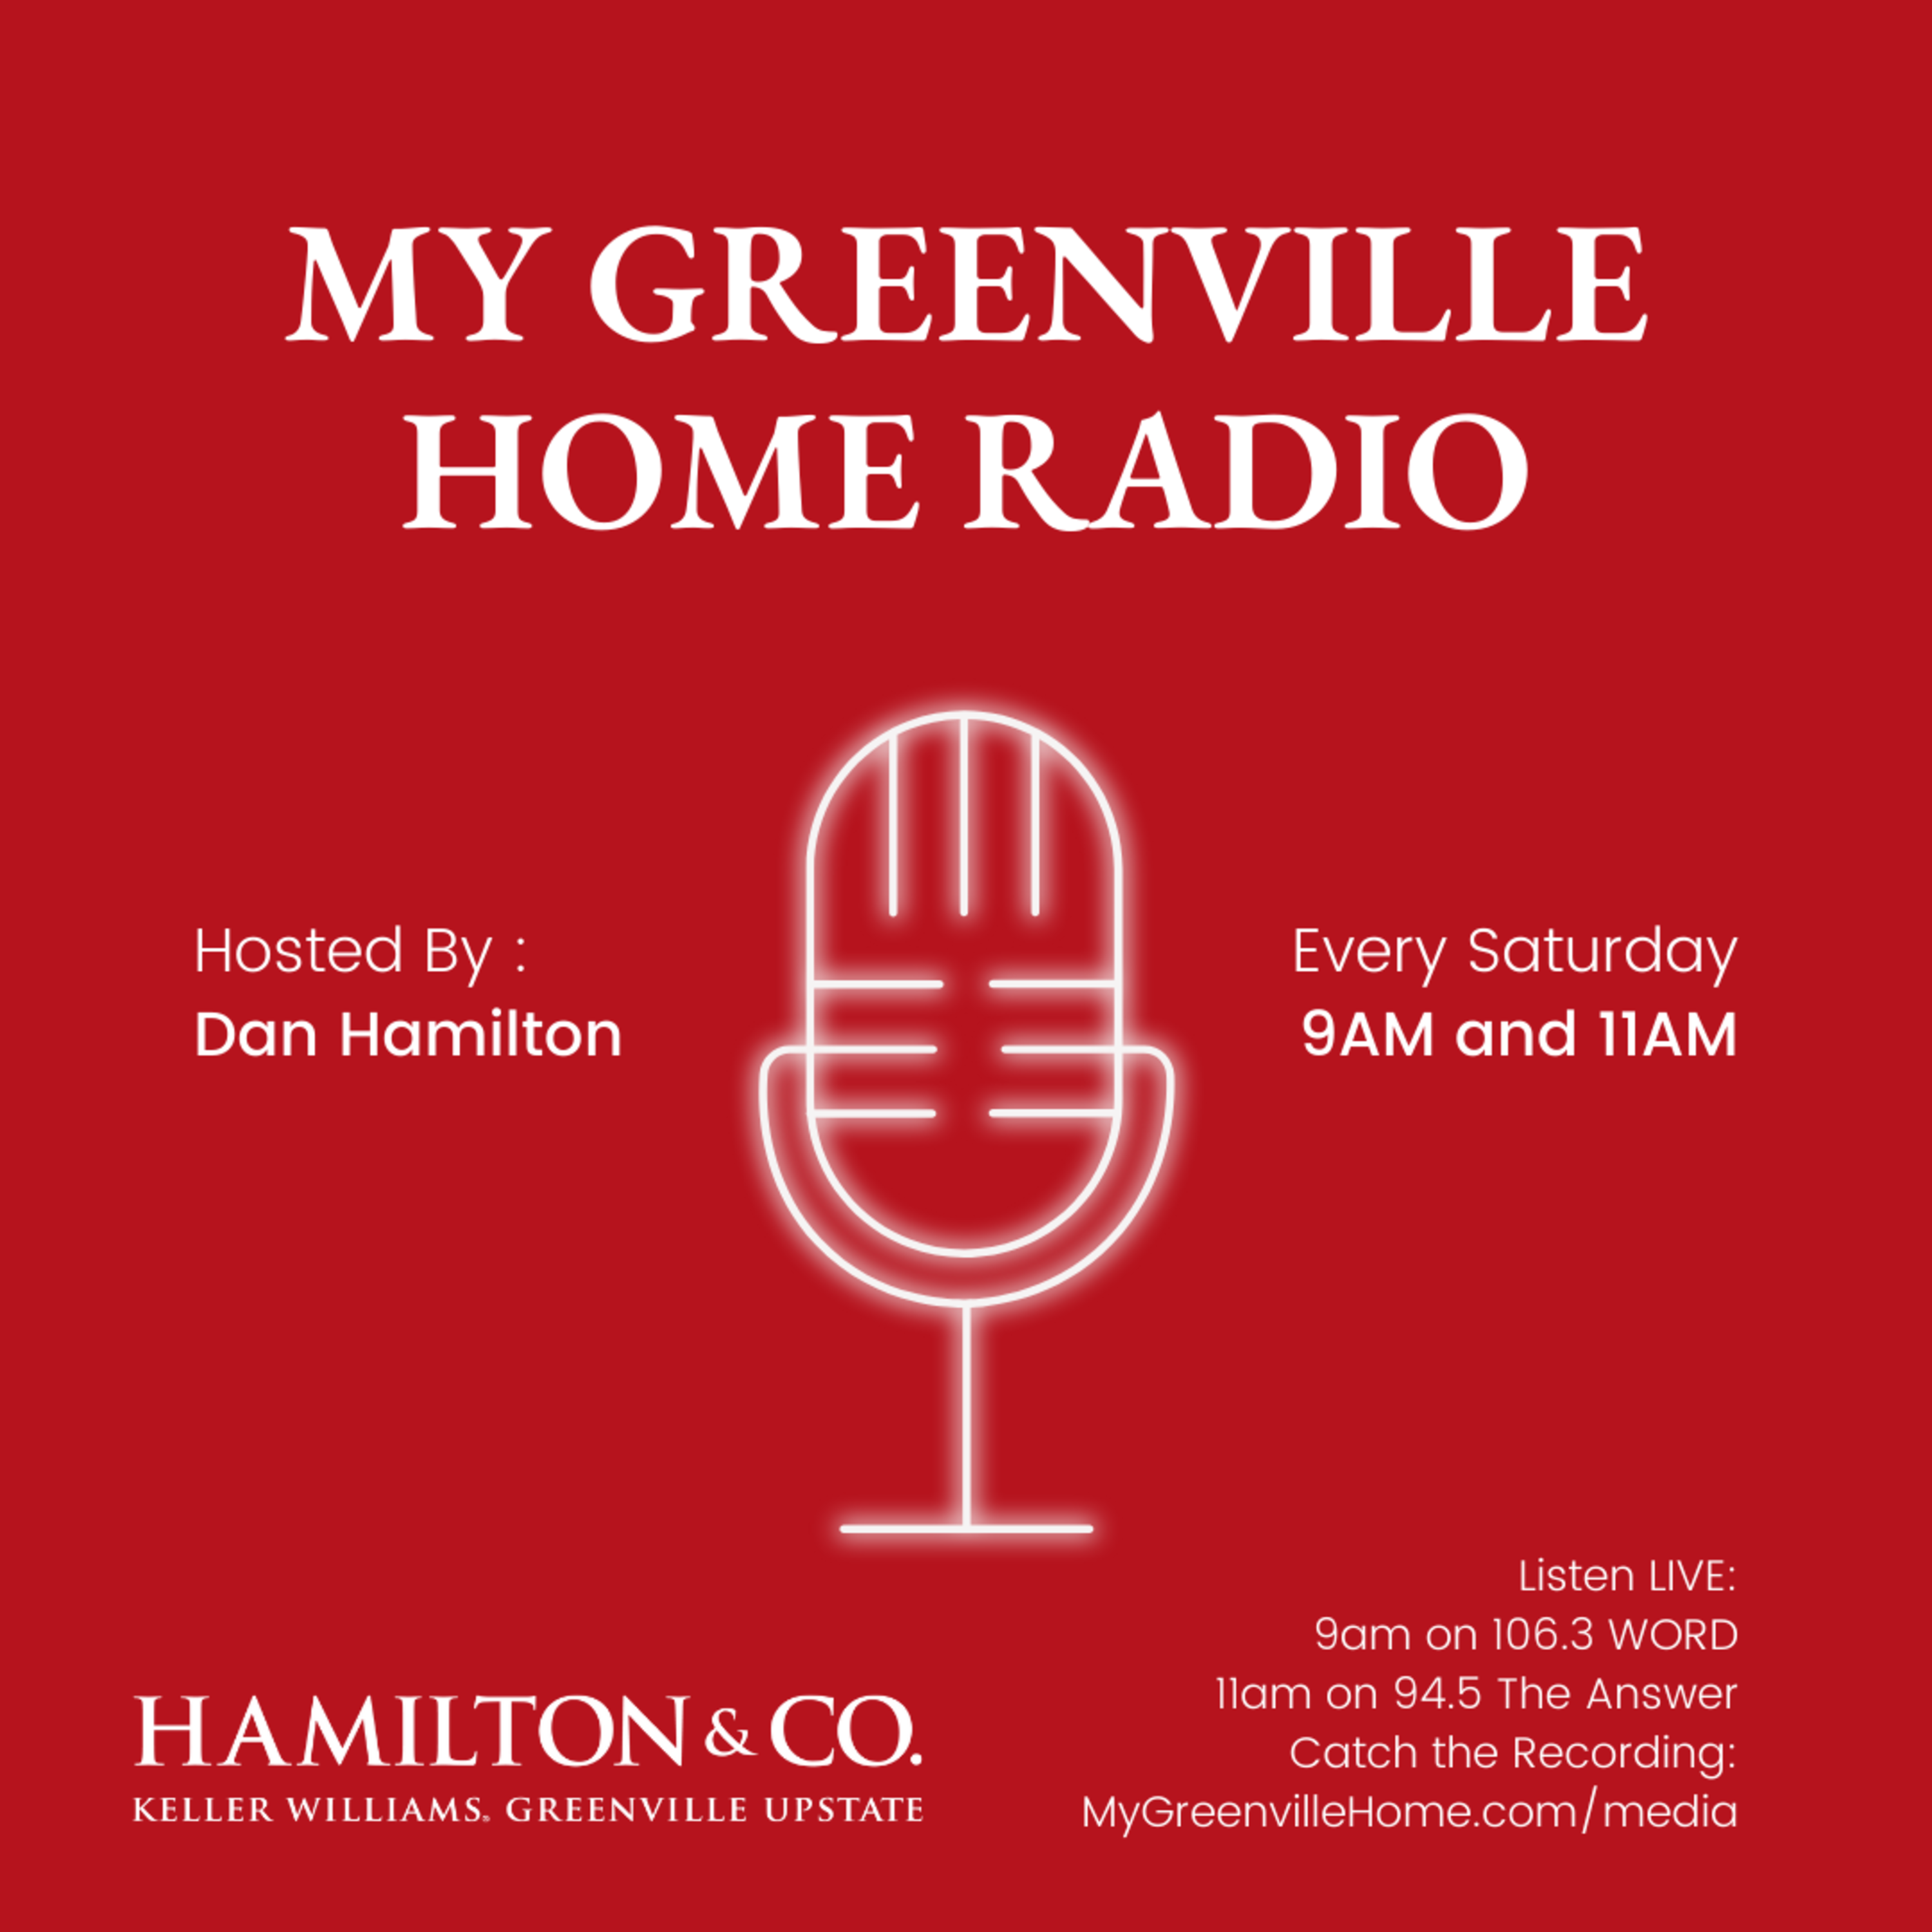 My Greenville Home Radio